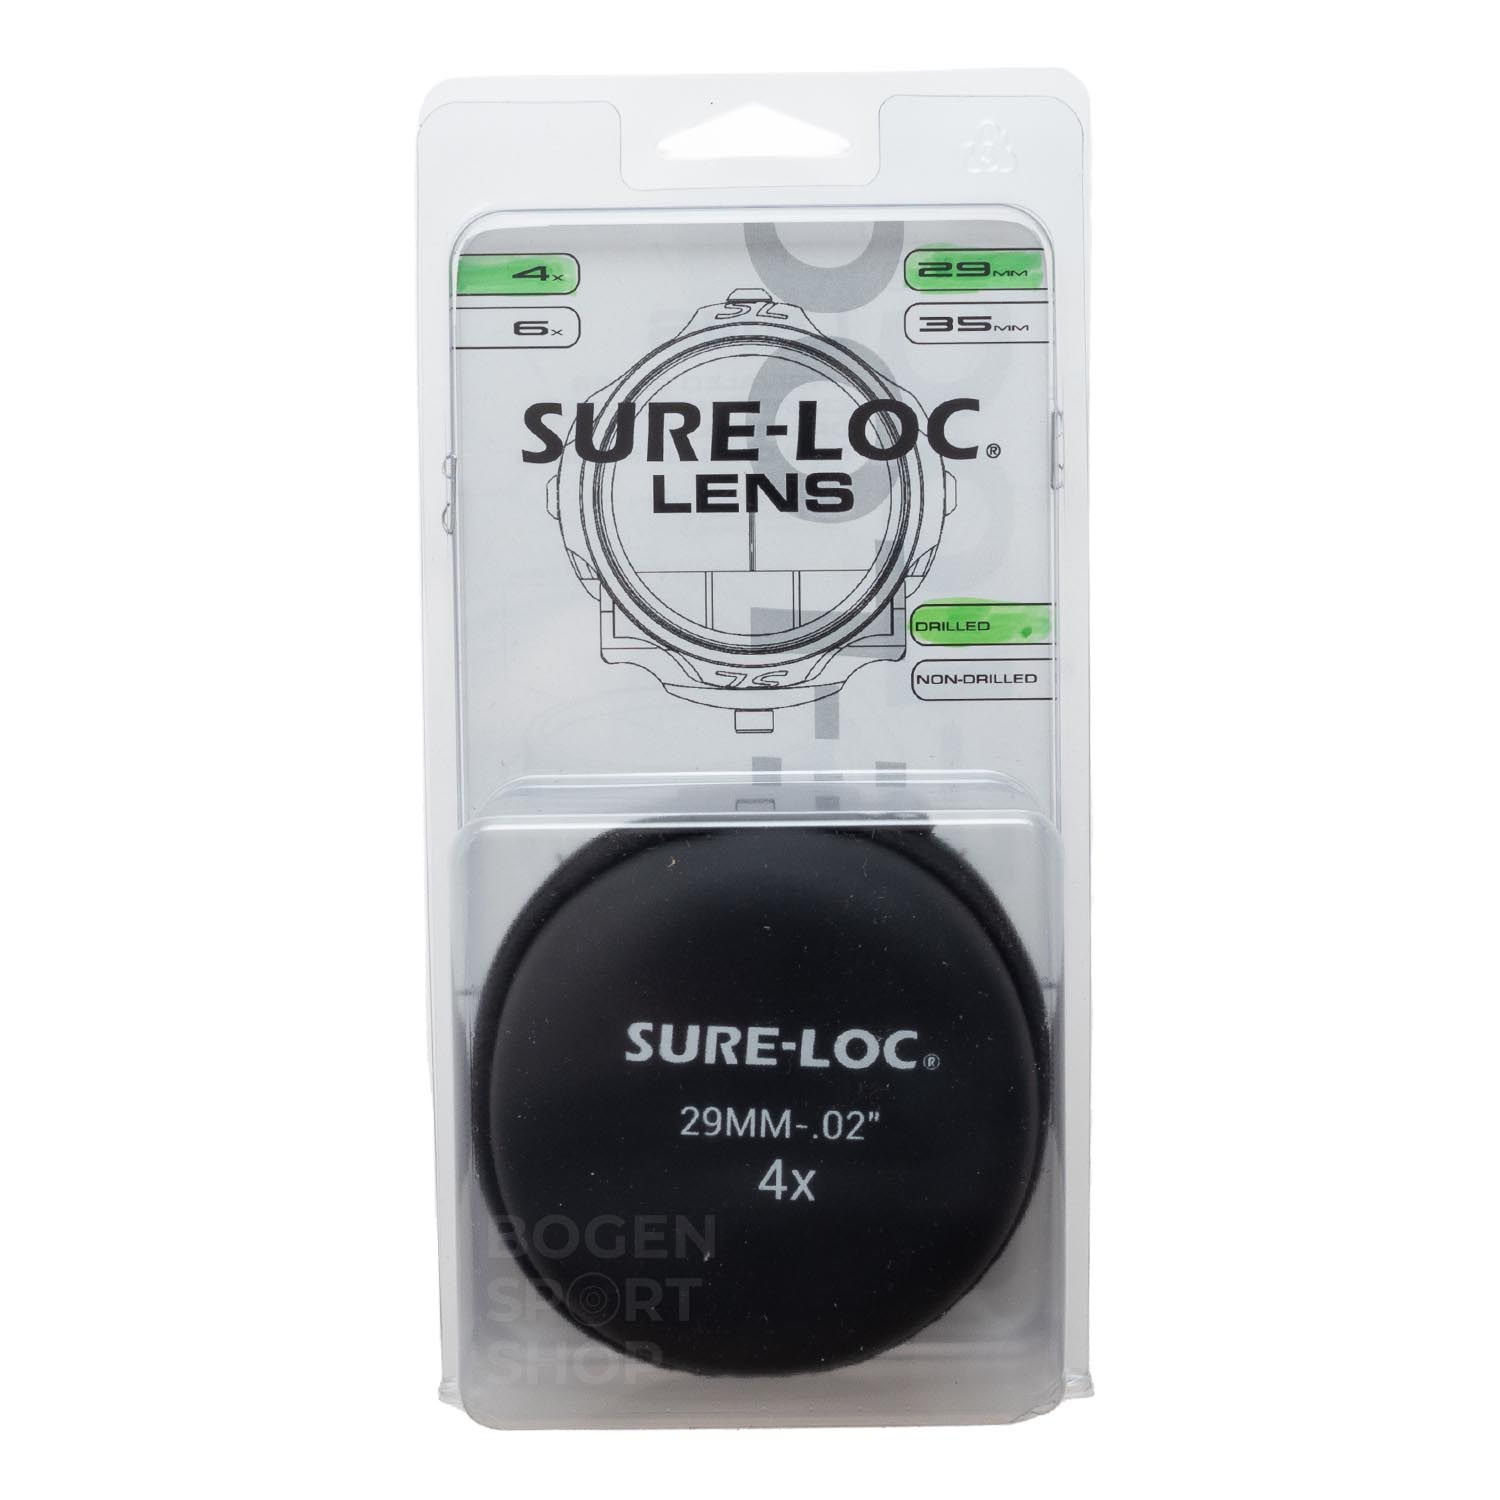  Buy Sure-Loc Lens online